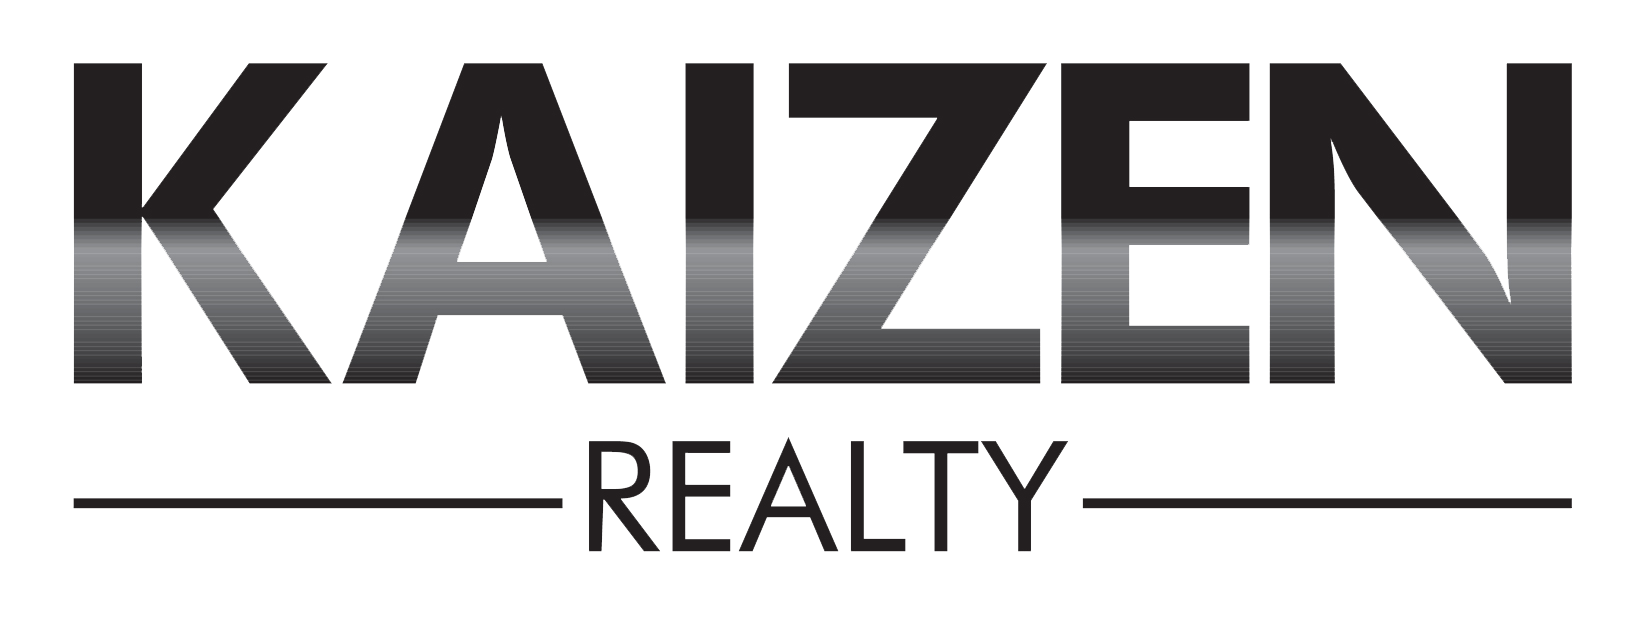 KAIZEN-new-logo_transparent